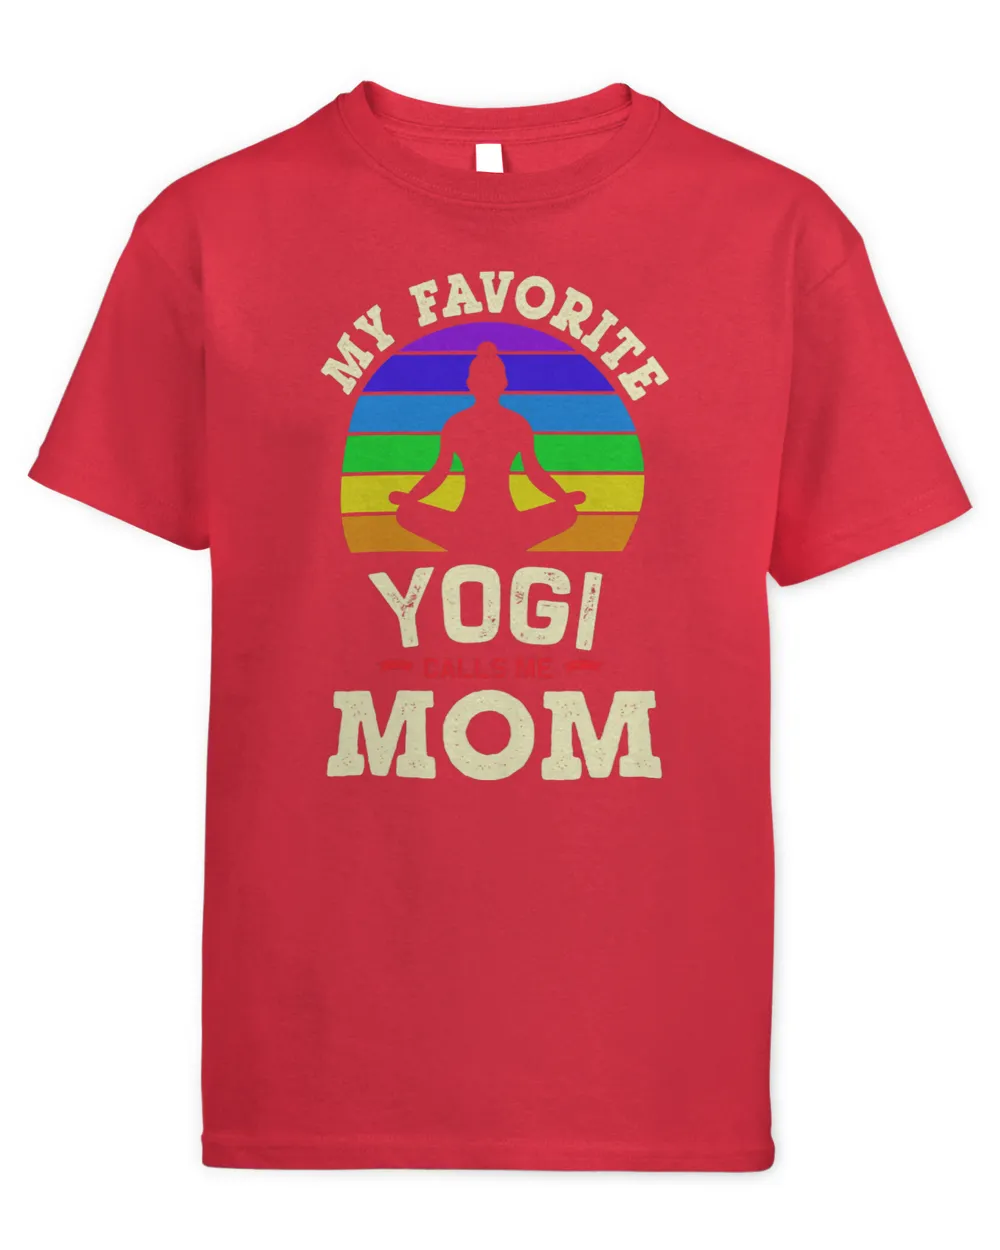 Womens My Favorite Yogi Calls Me MOM Retro Yoga Zen Meditation